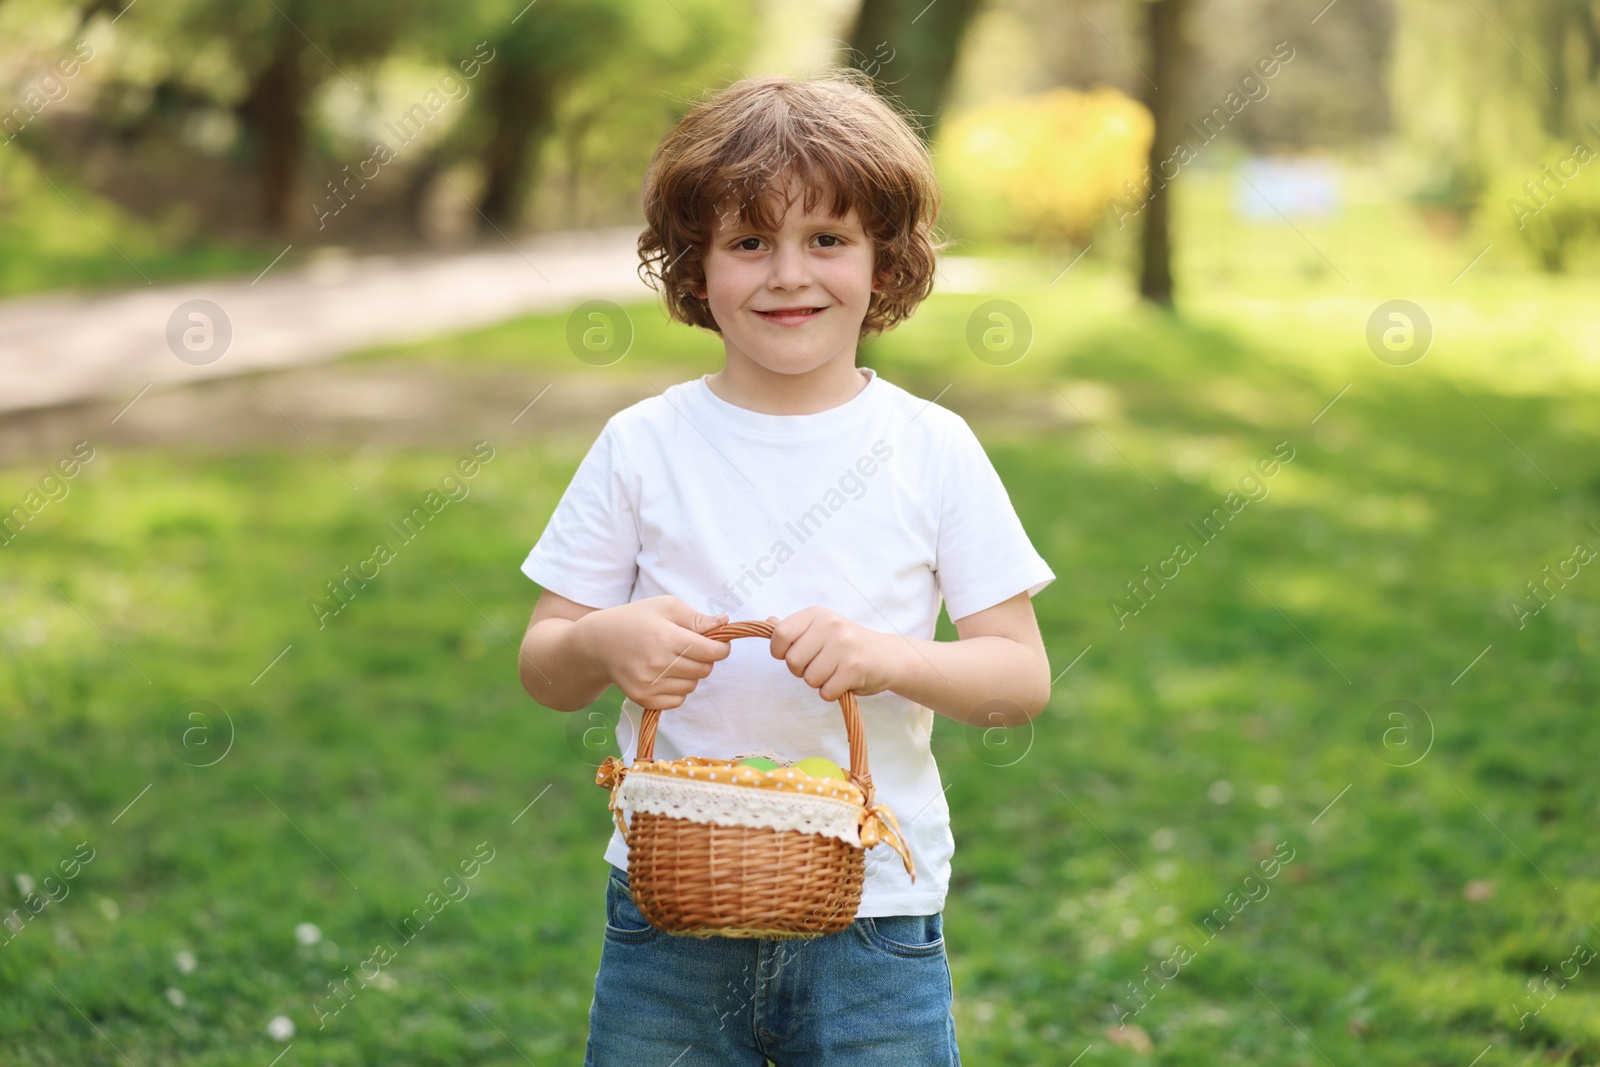 Photo of Easter celebration. Cute little boy holding wicker basket outdoors